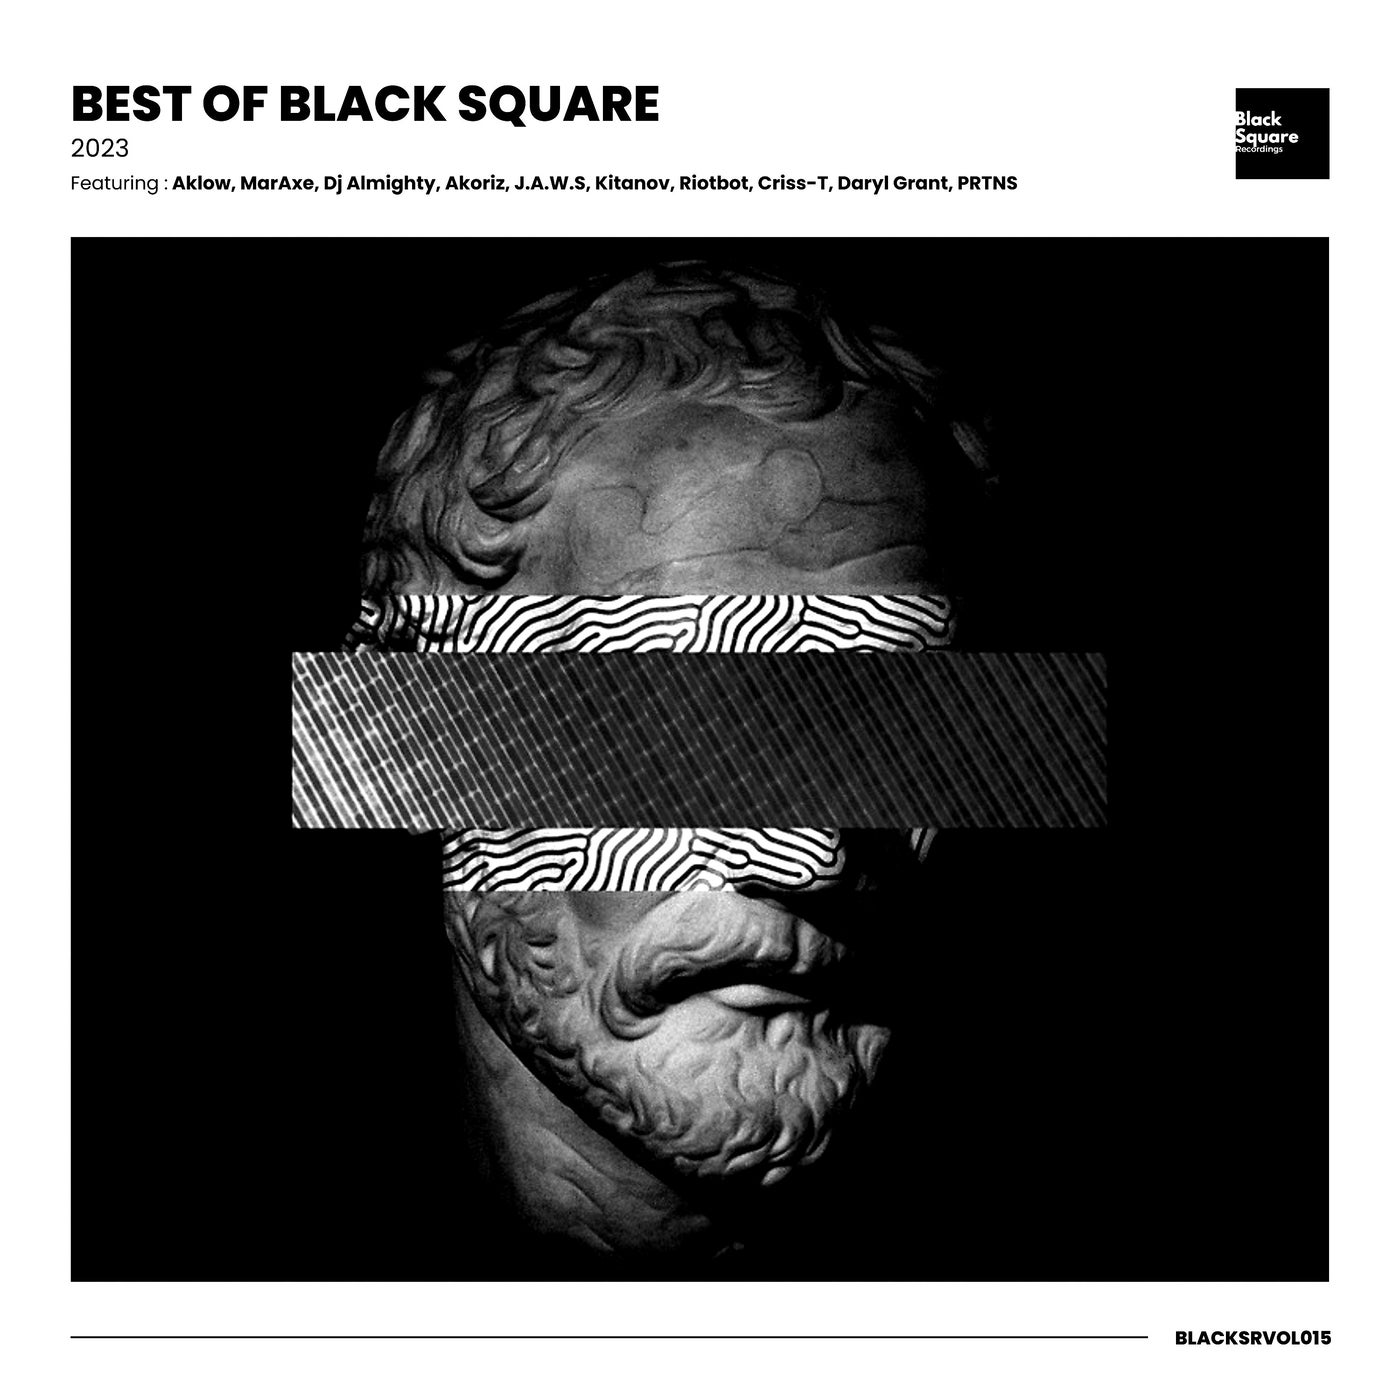 Best of Black Square 2023